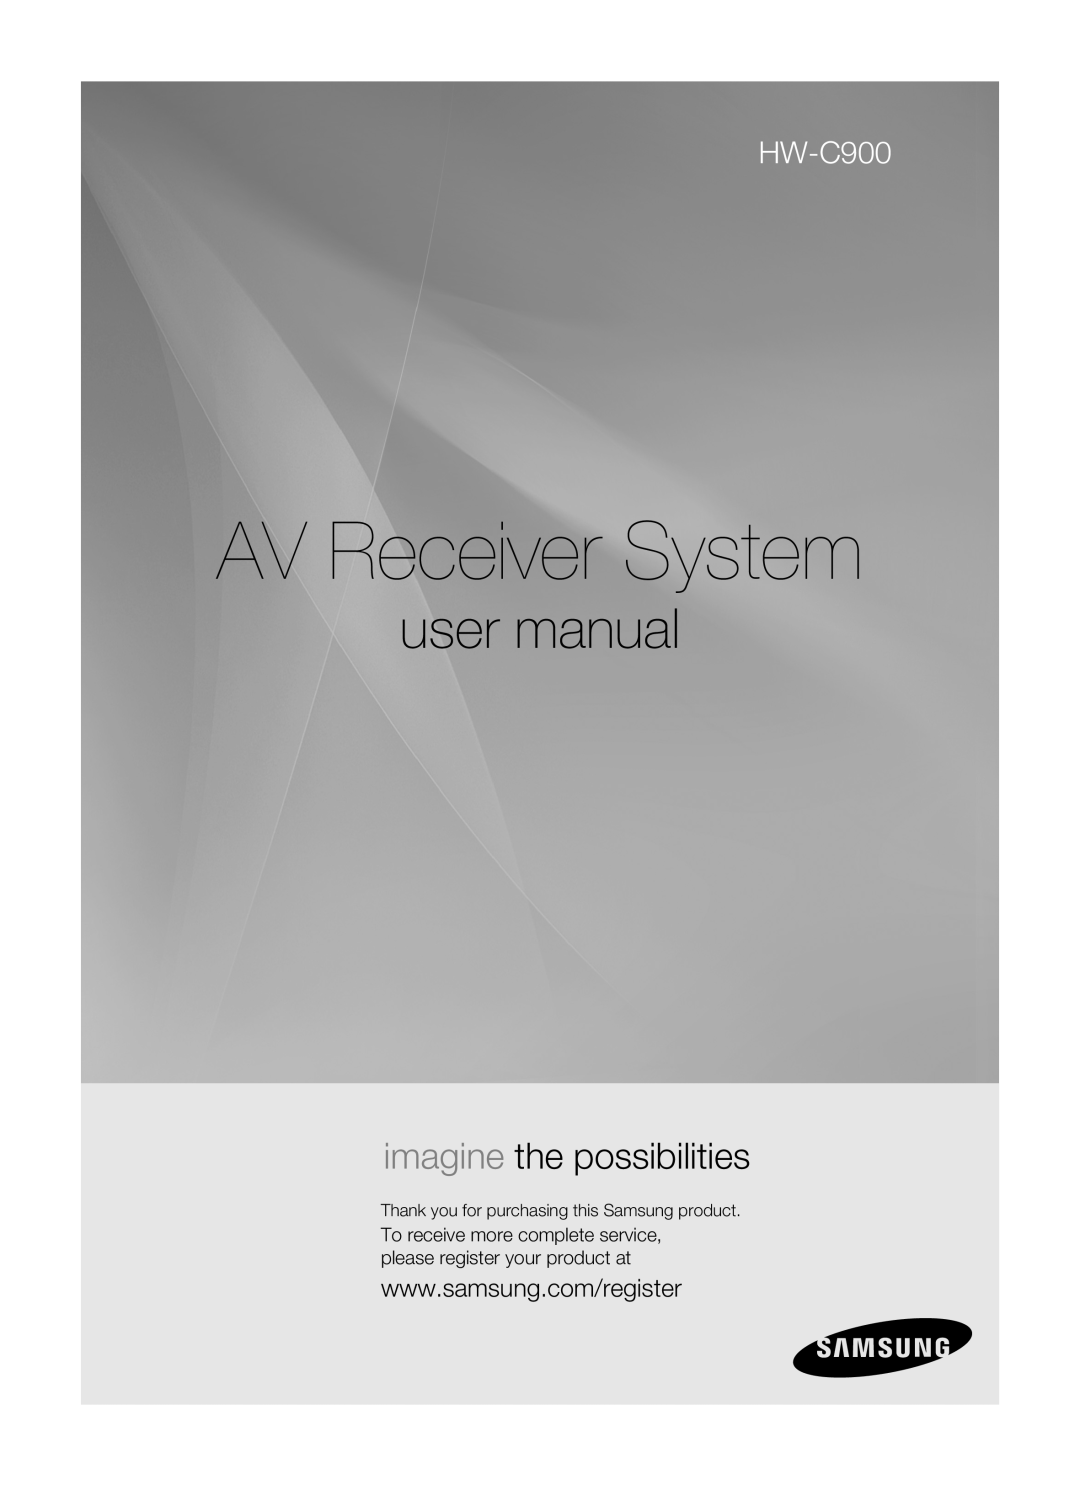 Samsung HW-C900-XAA user manual AV Receiver System, imagine the possibilities 